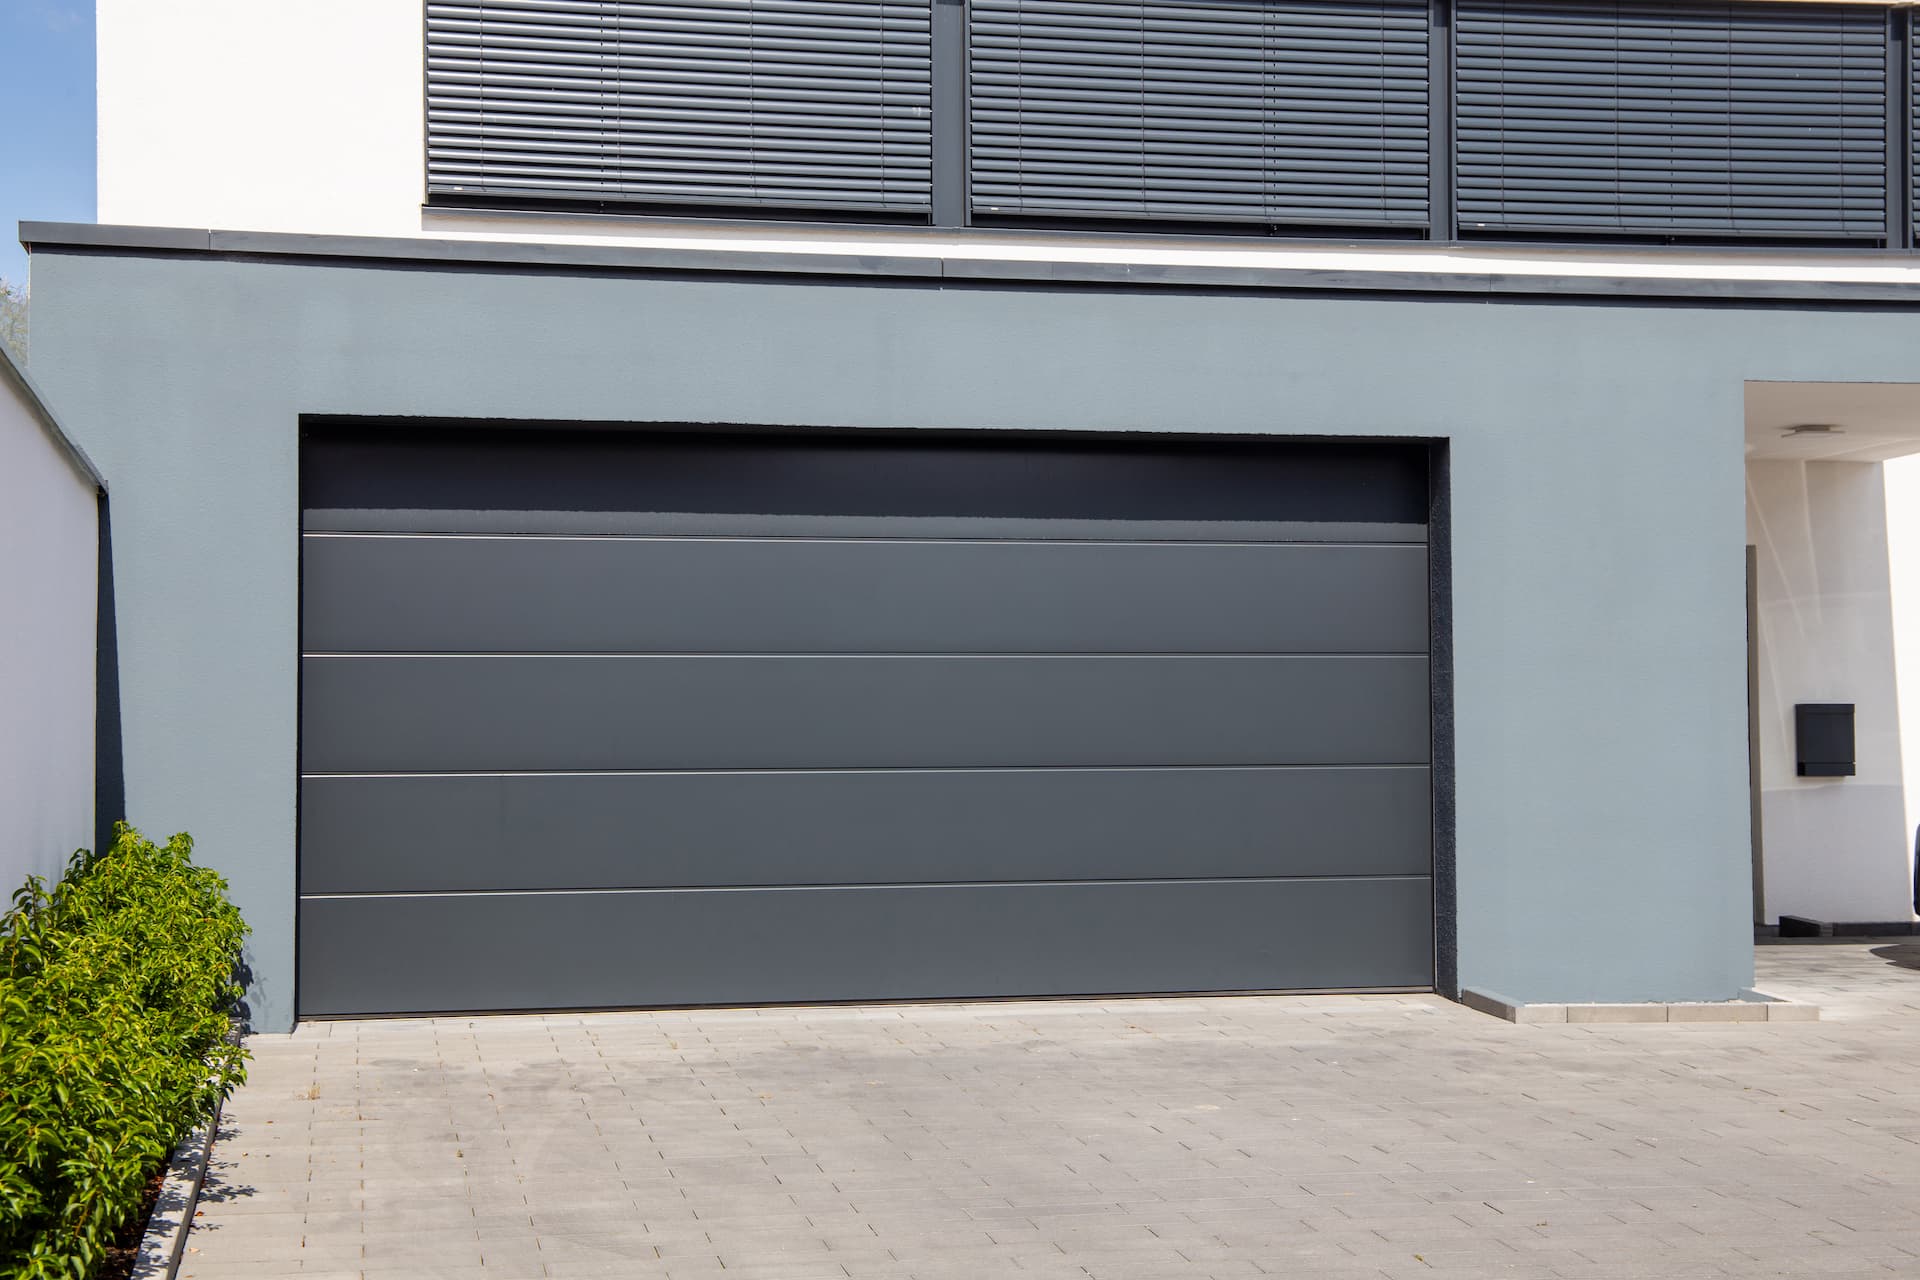 Insulated Garage Doors in Seaton